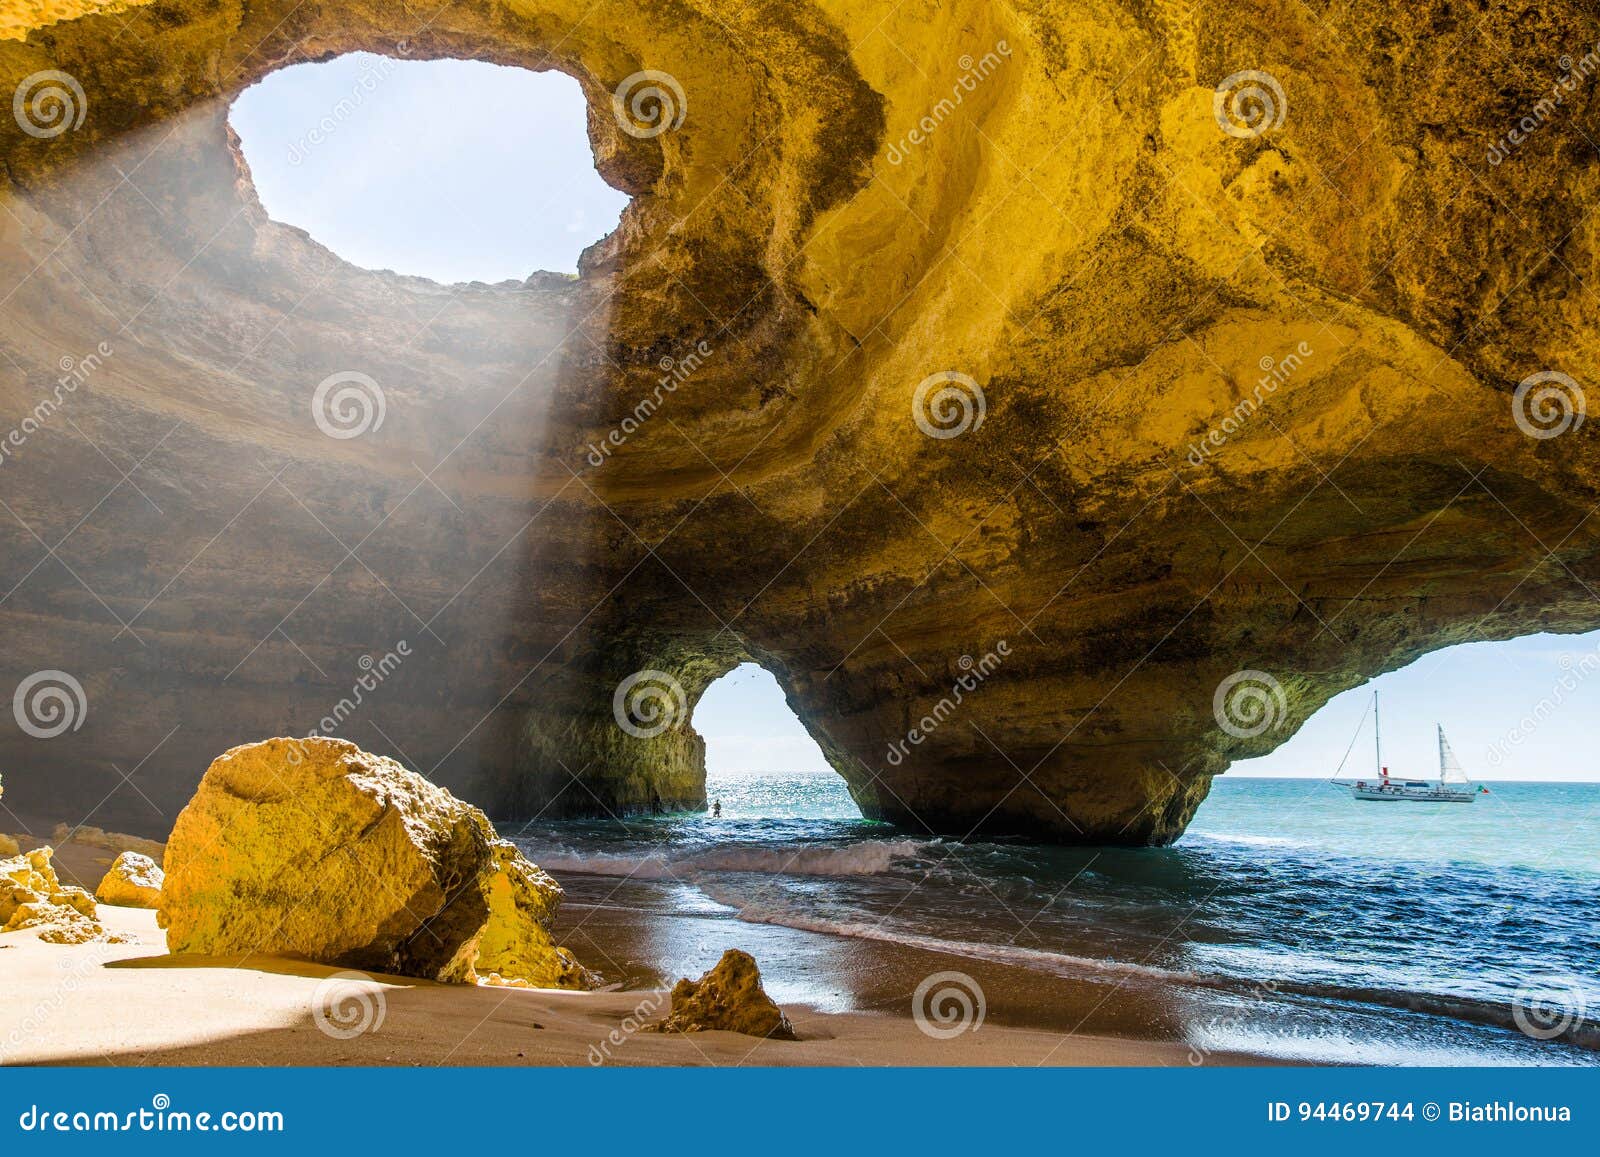 benagil cave. algarve coast. portugal